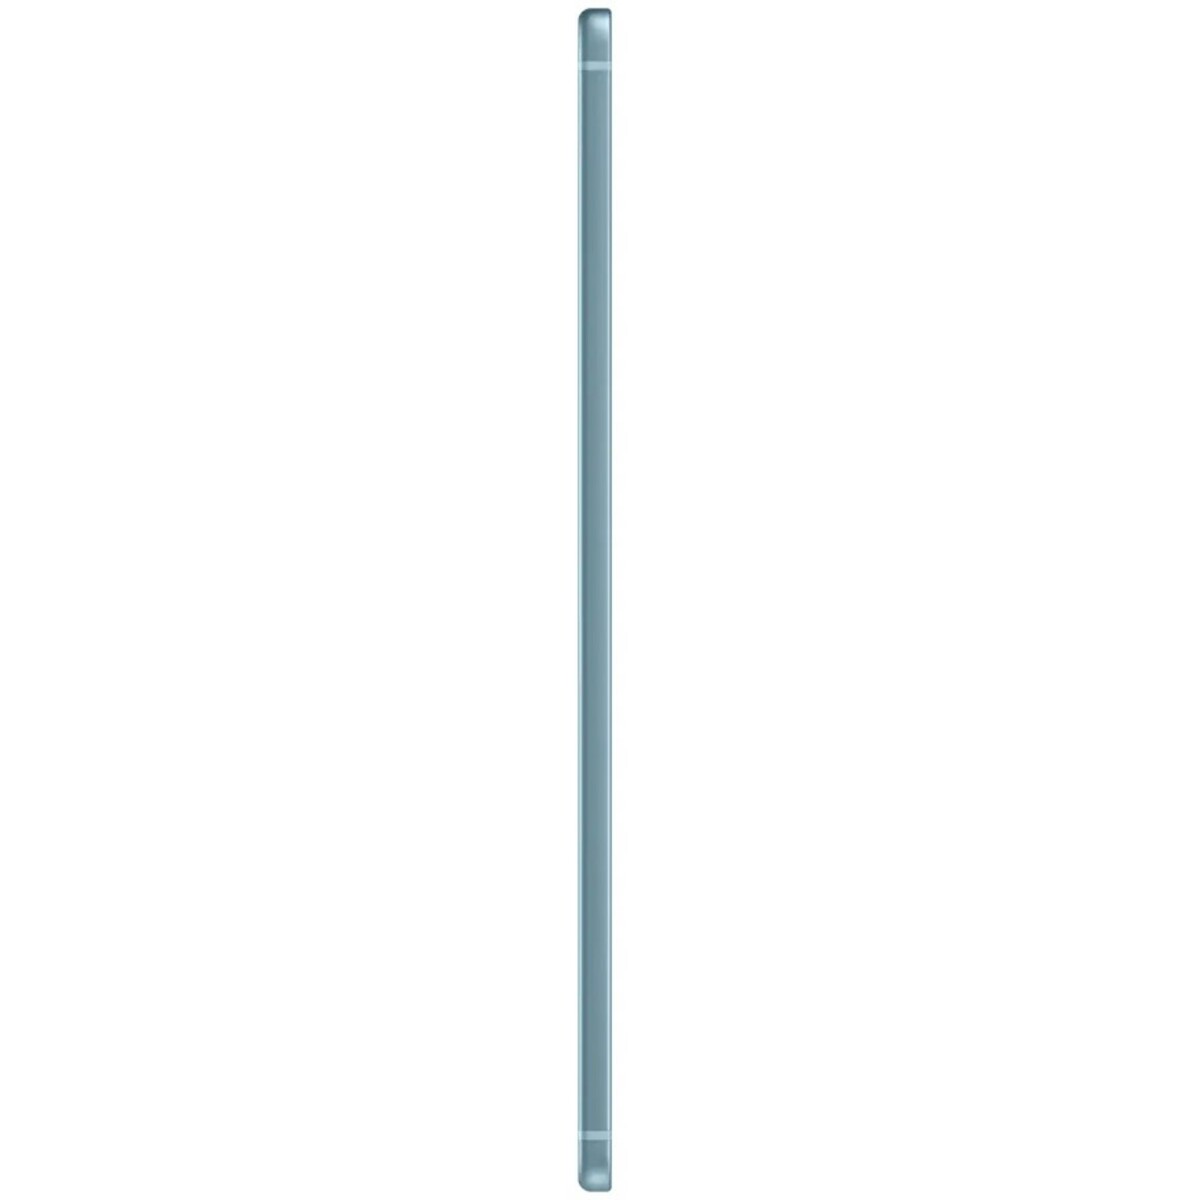 Планшет Samsung Galaxy Tab S6 Lite (2022 Edition) Wi-Fi 64Gb (Цвет: Angora Blue)